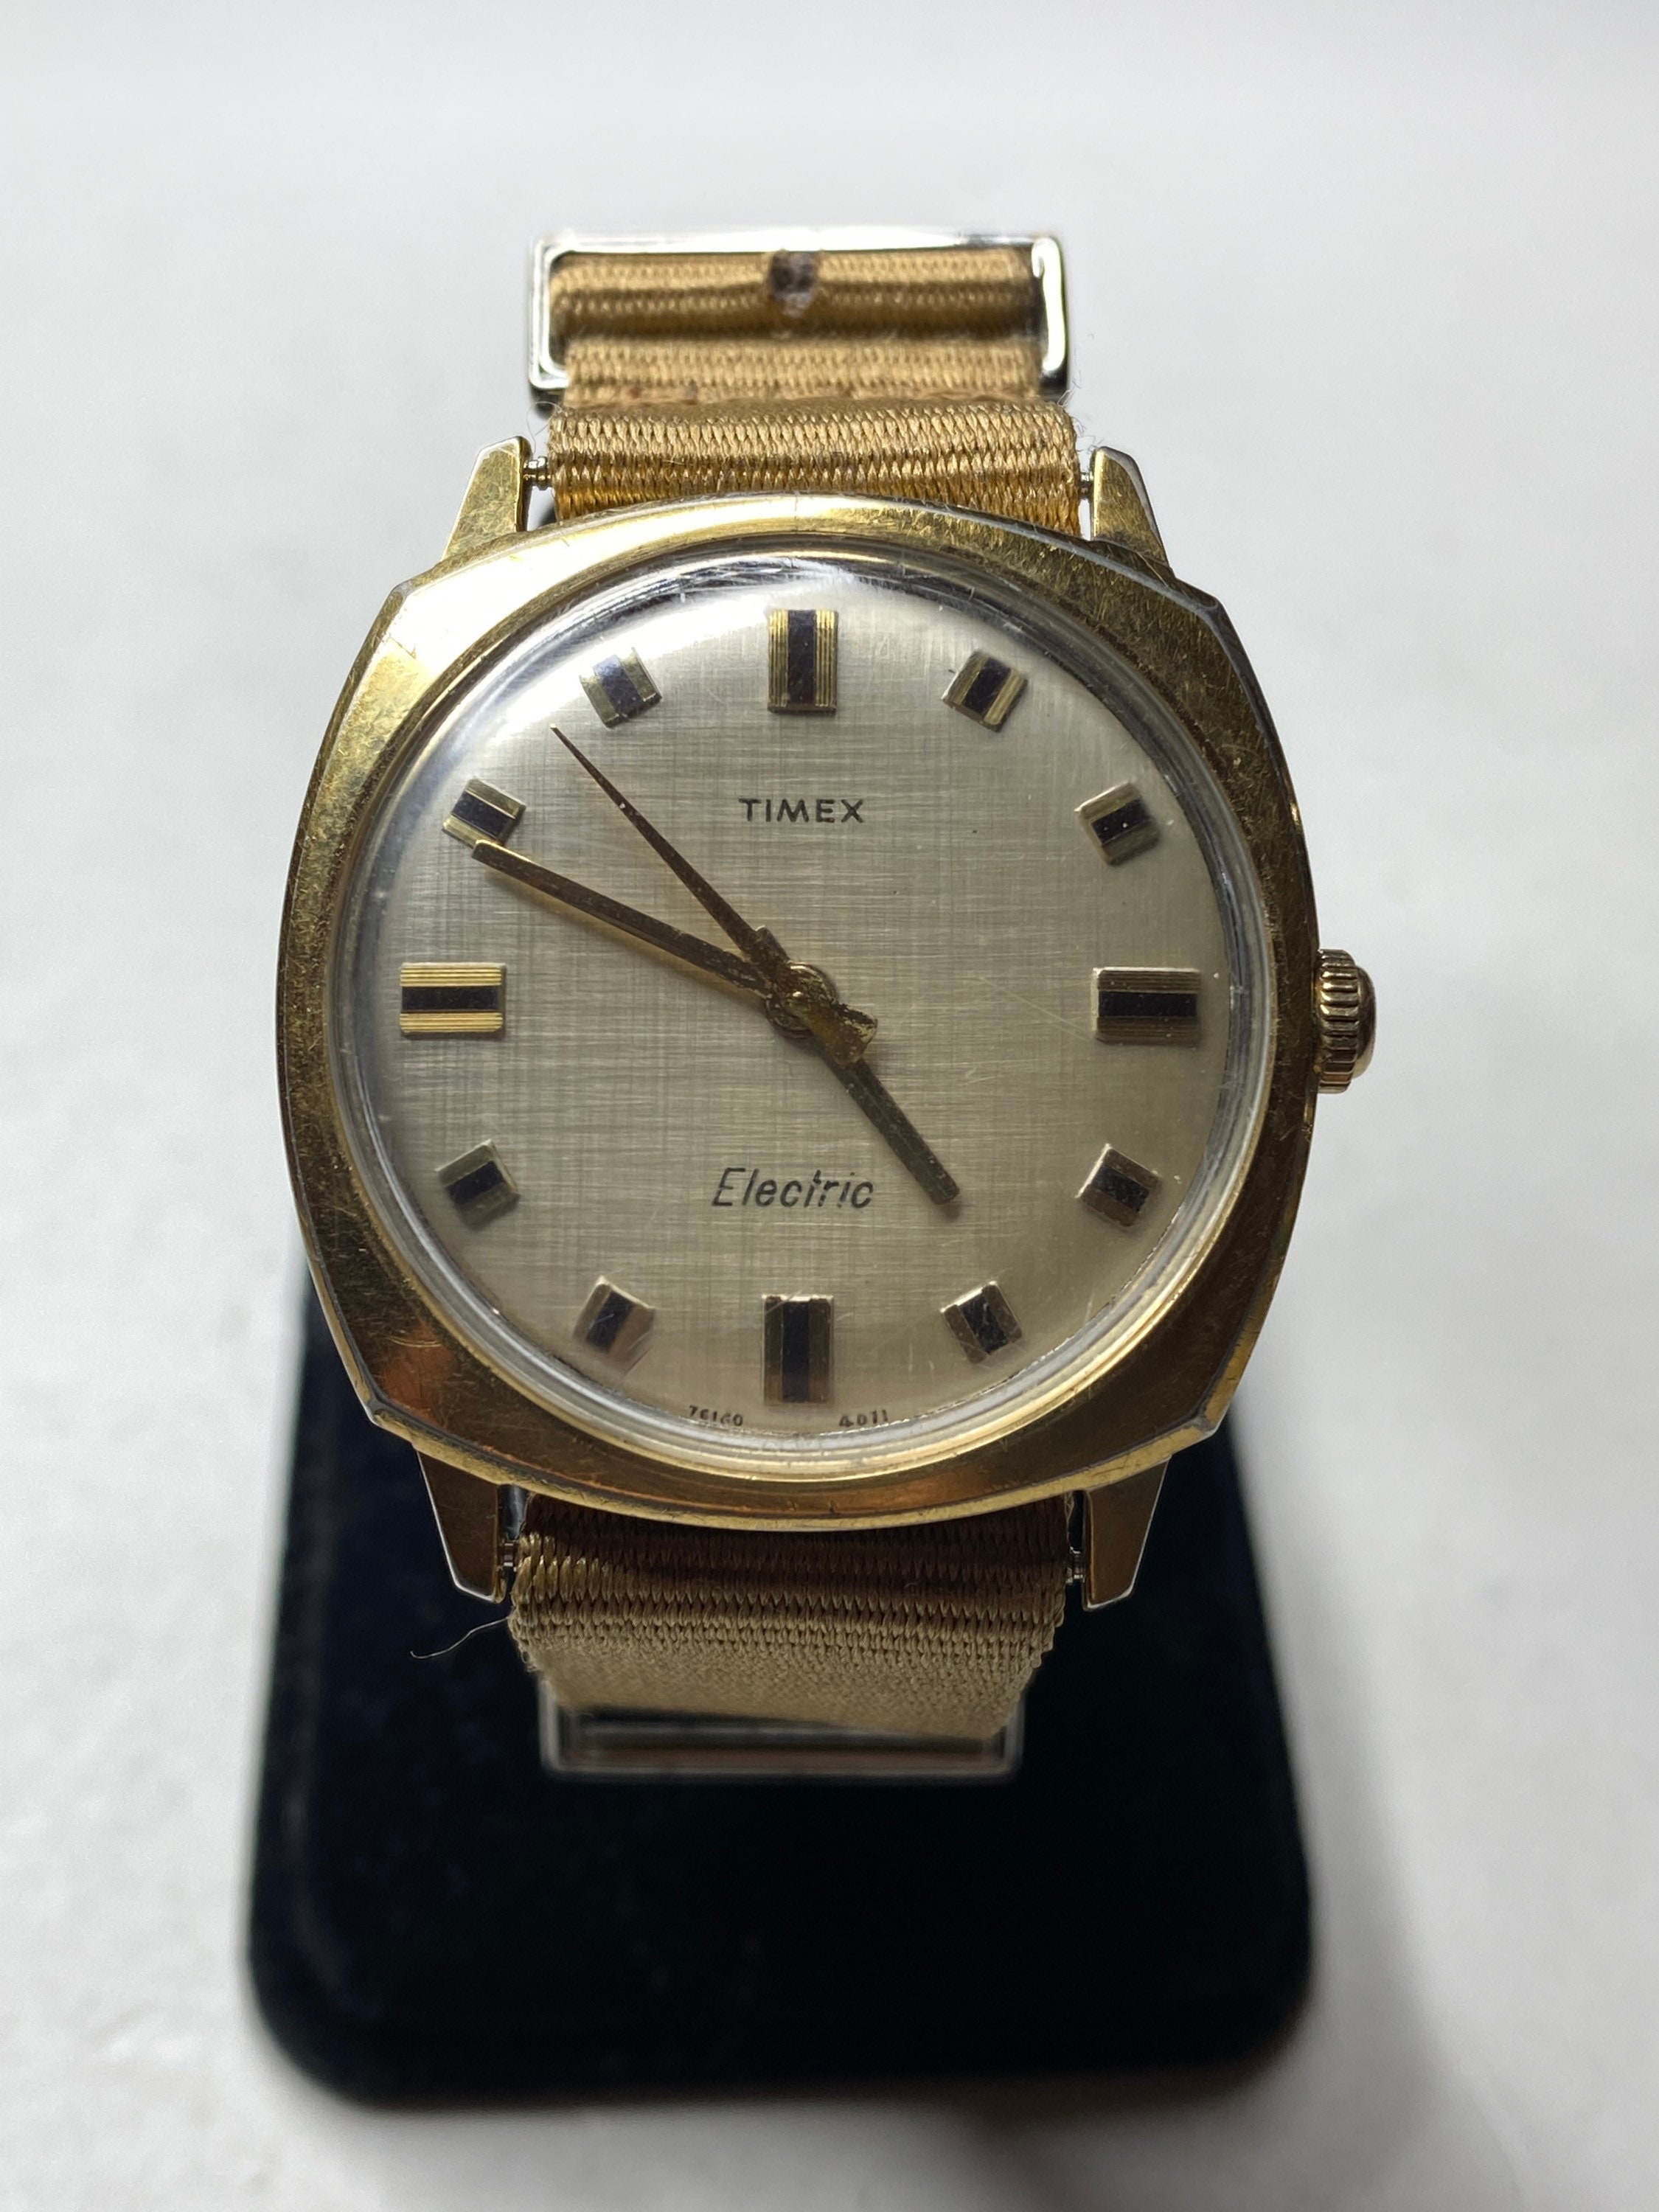 Timex Electric Watch - Etsy New Zealand